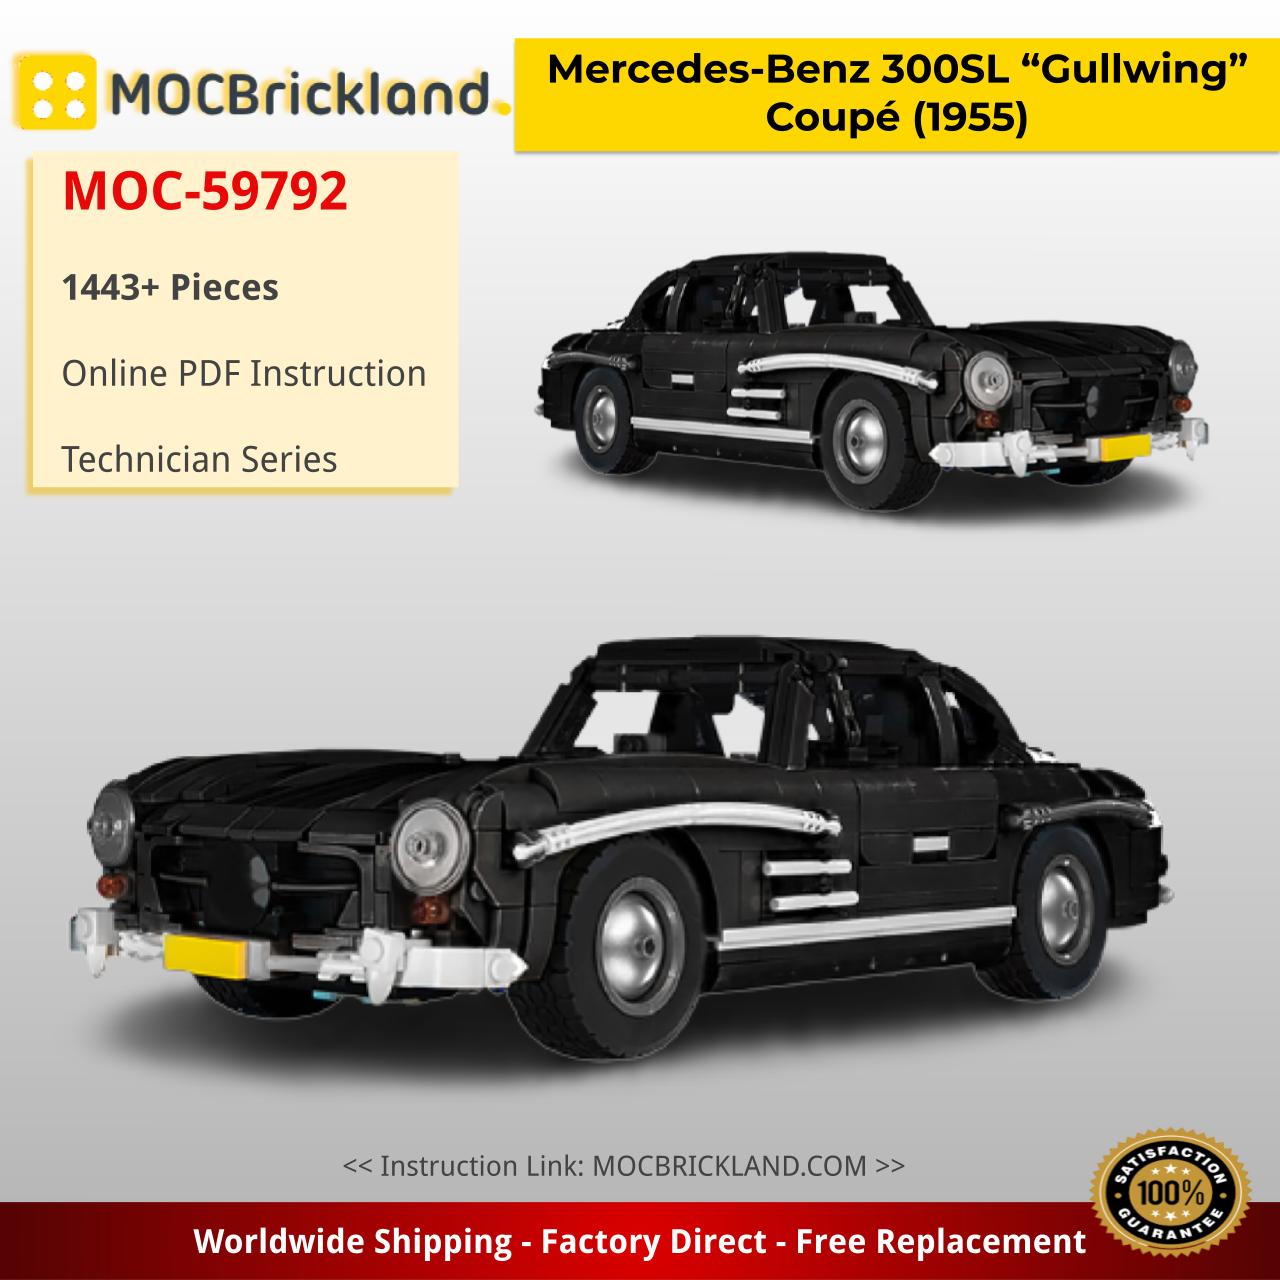 MOCBRICKLAND MOC-59792 Mercedes-Benz 300SL “Gullwing” Coupé (1955)